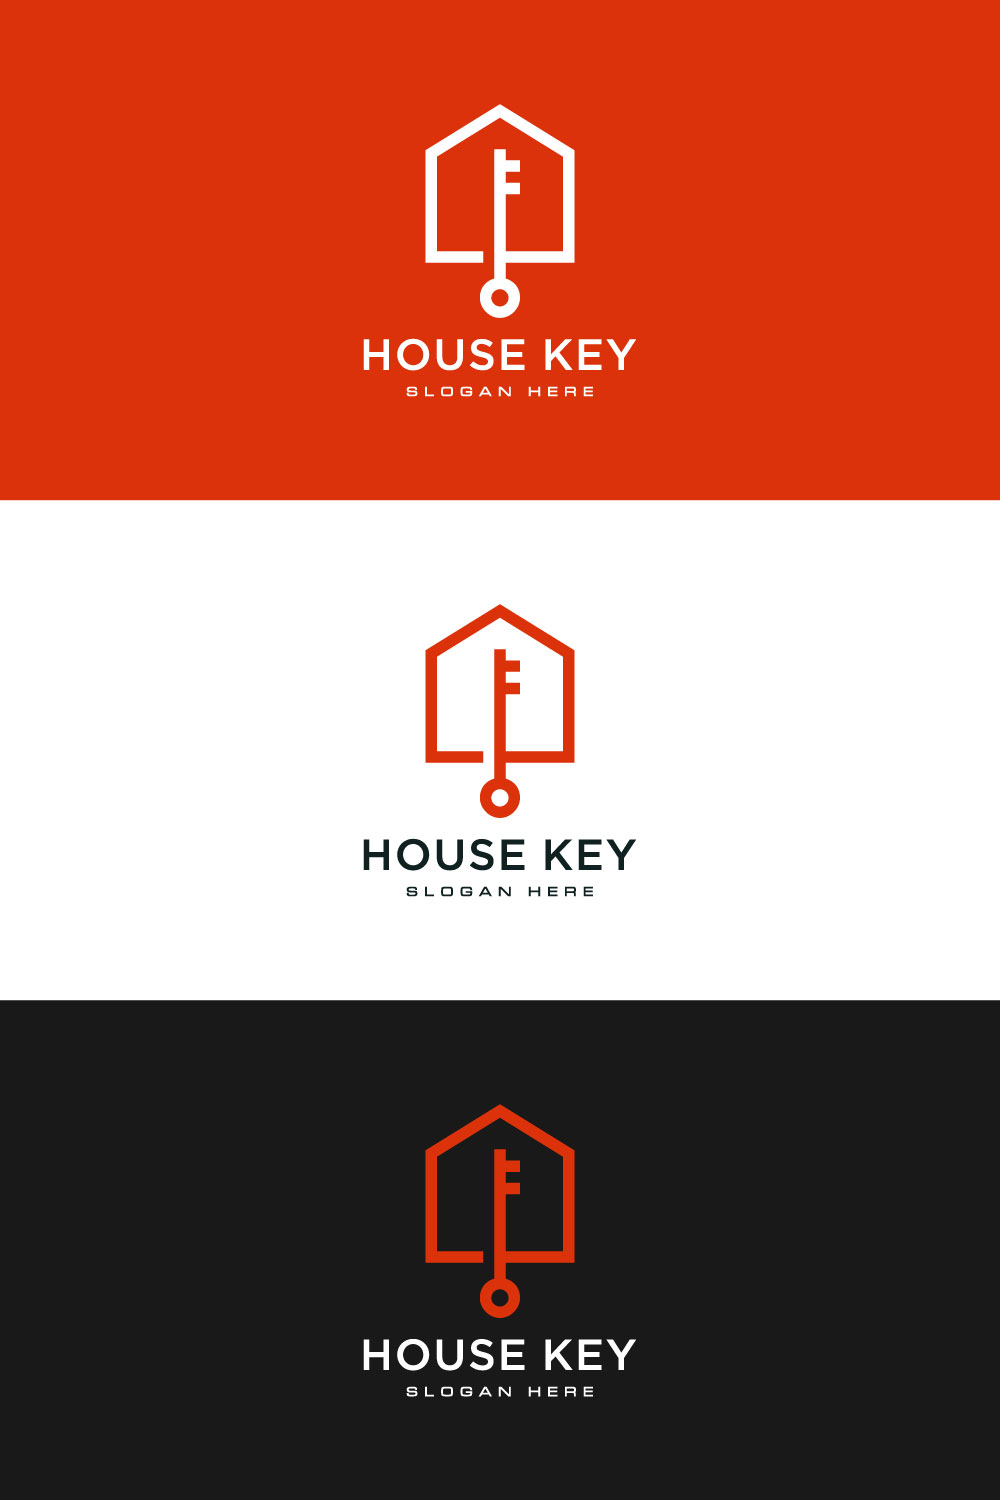 House Key Logo Vector Design Template Pinterest Image.